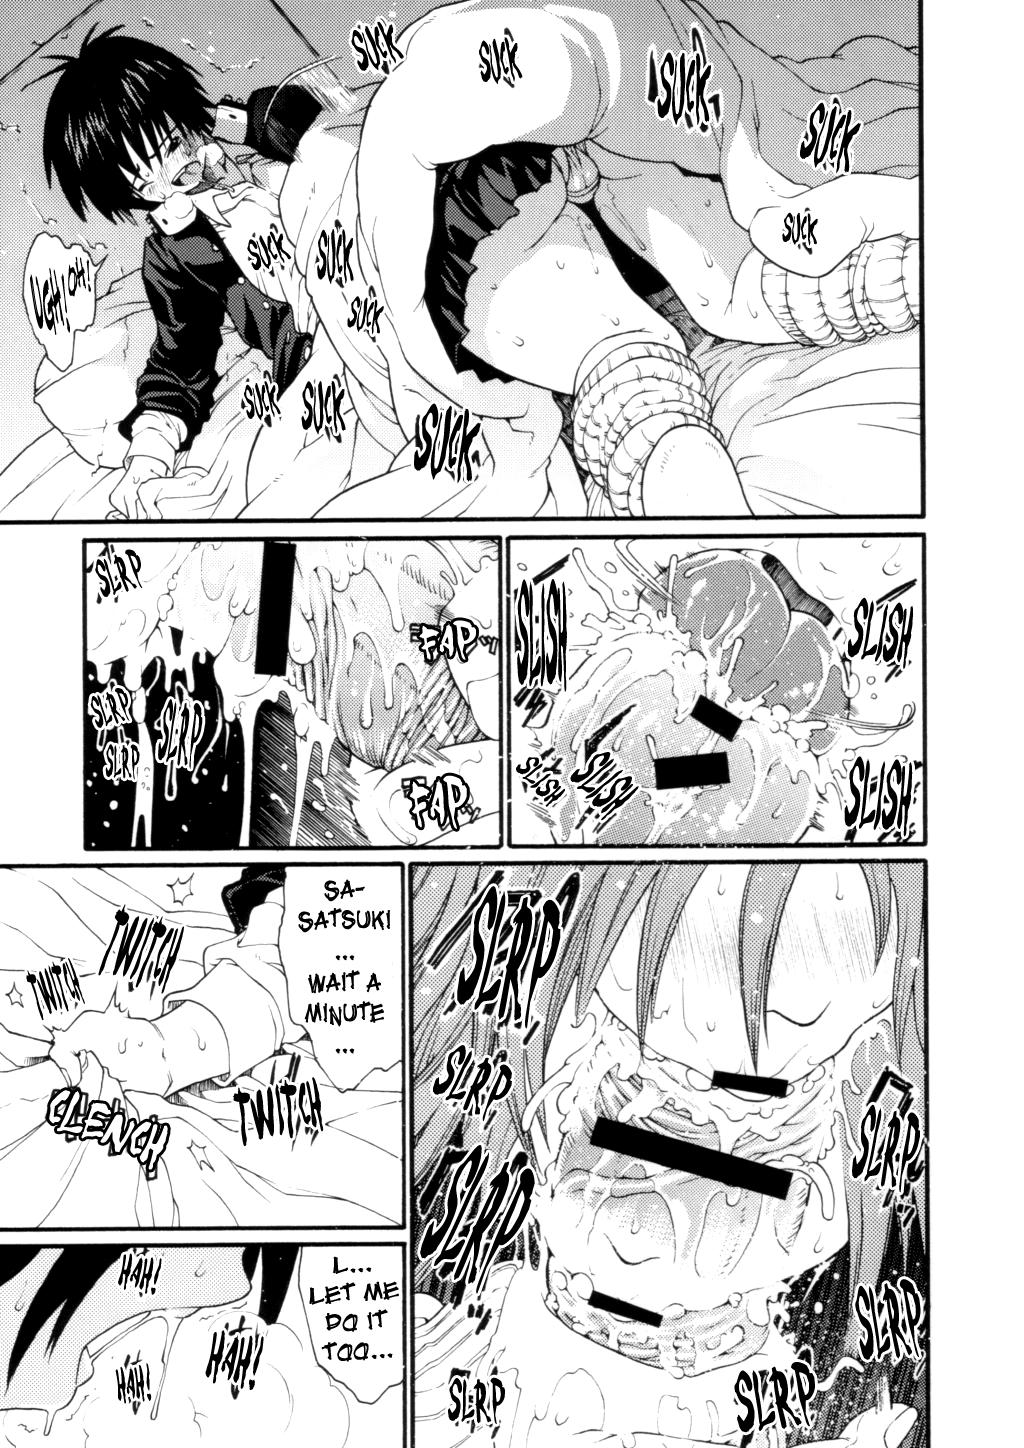 Gaycum Haru Ichigo Vol. 2 - Spring Strawberry Vol. 2 - Ichigo 100 Hunk - Page 10